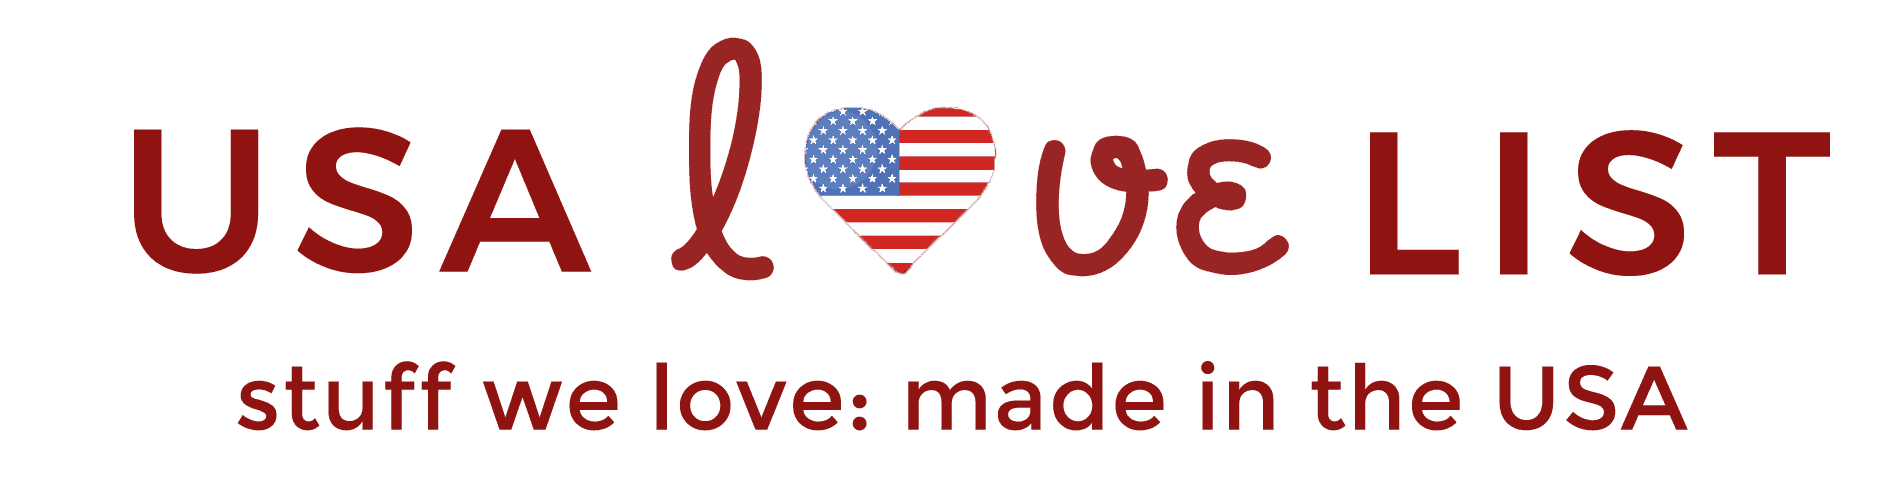 USA Love List